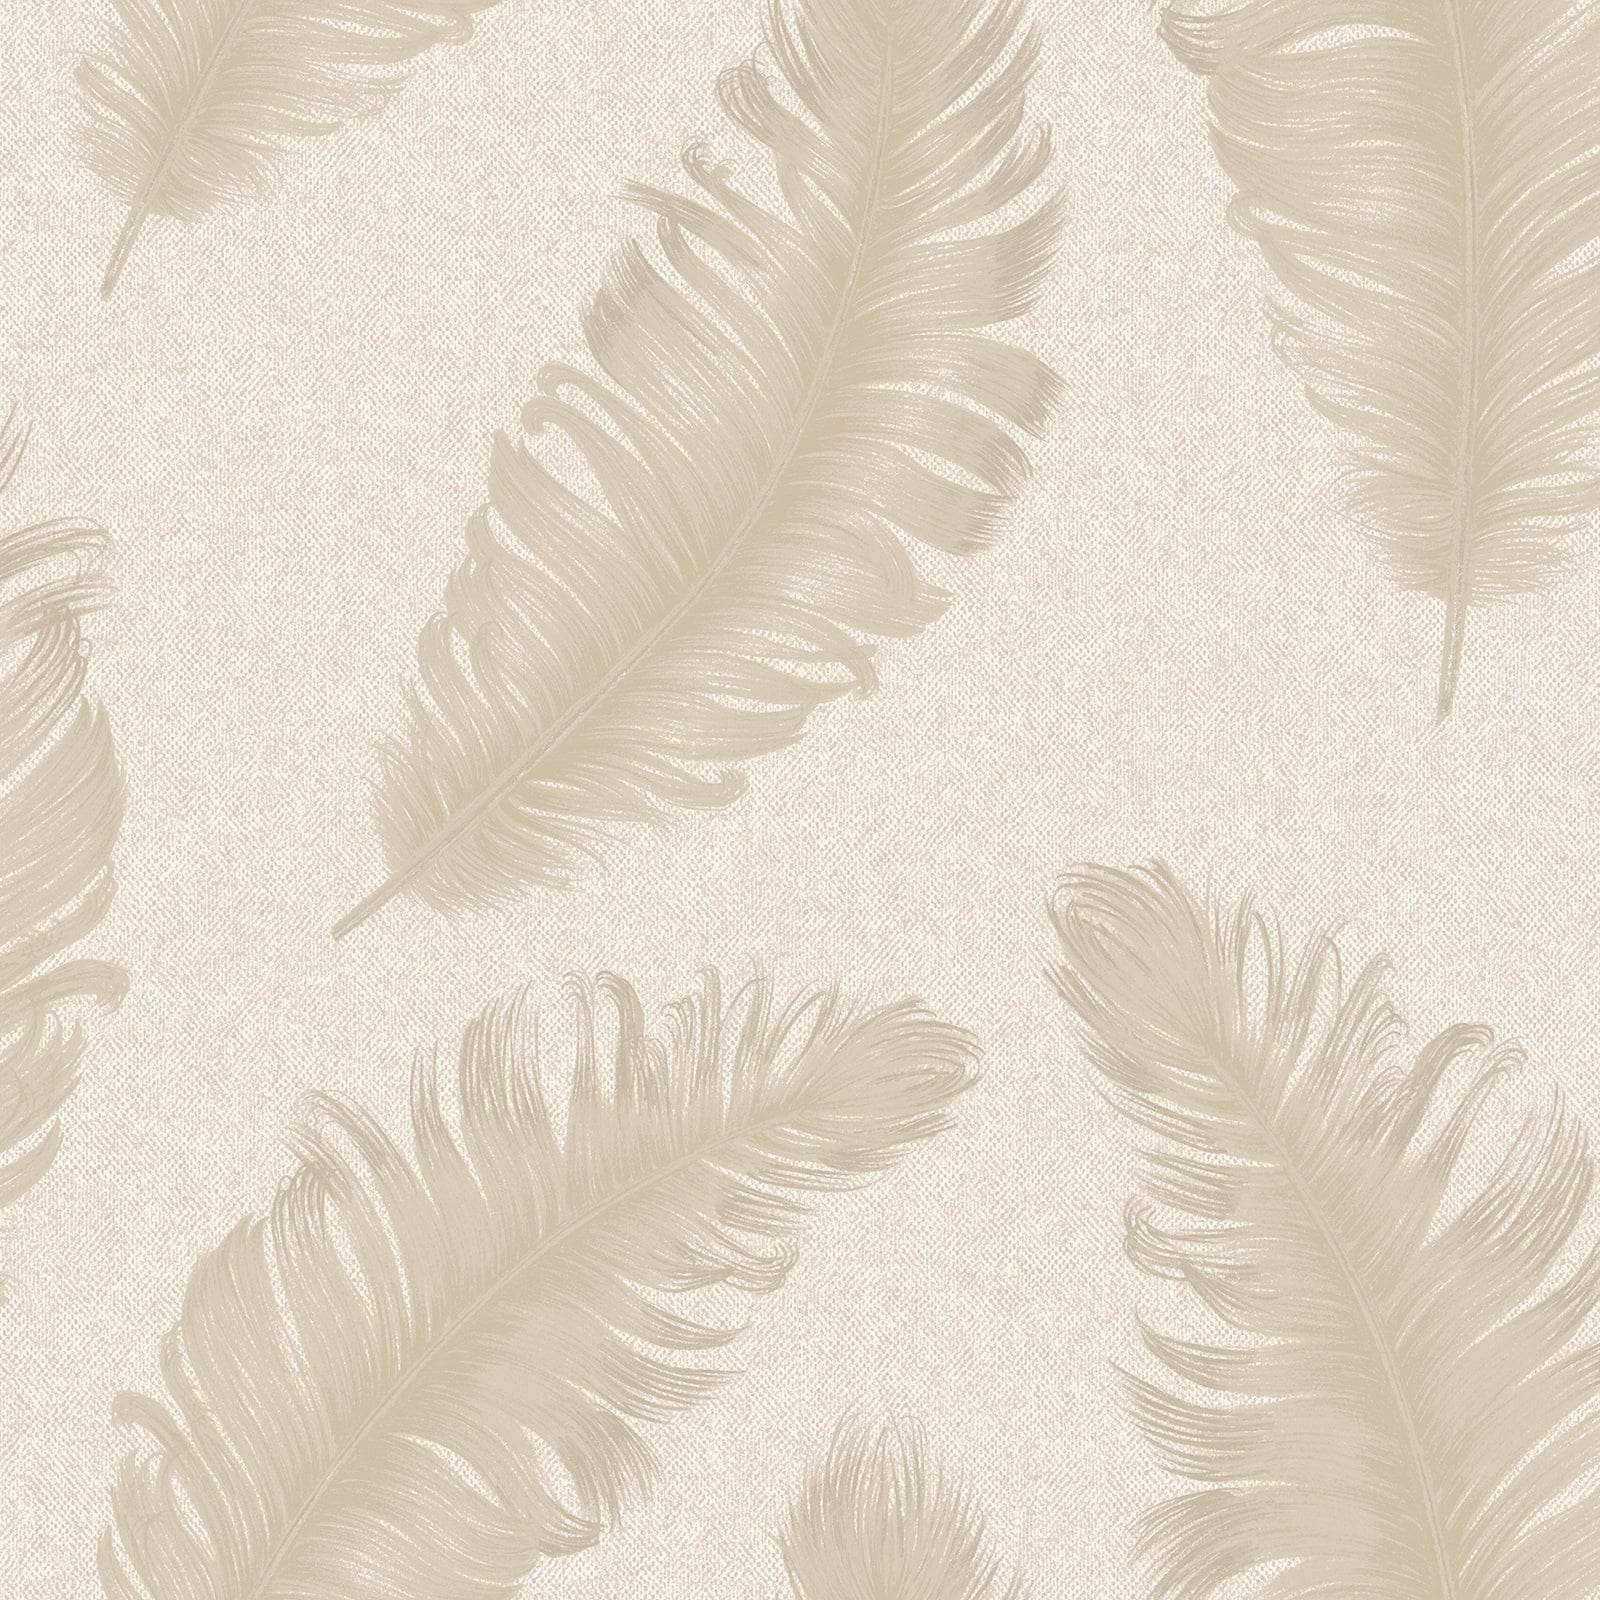 Wallpaper  -  Belgravia Ciara Soft Beige Feather Wallpaper - 60005881  -  60005881